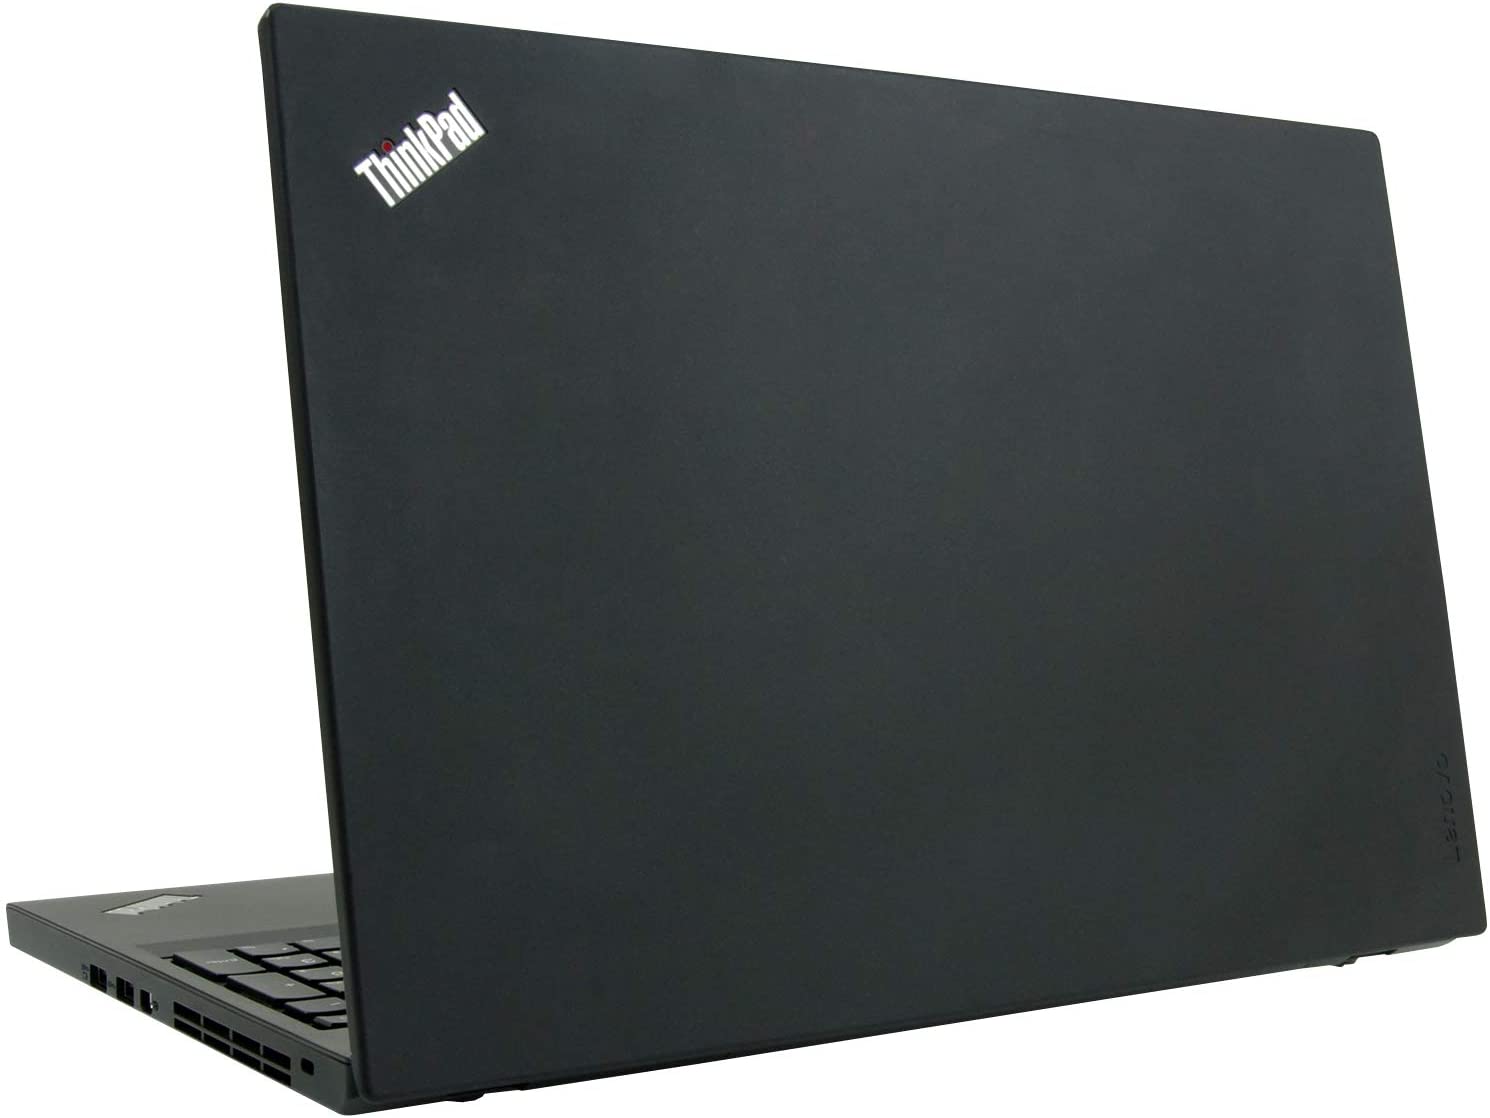 EPower Lenovo T560 15.6 inches 6th Gen HD Laptop, Windows 10 Professional 64Bit (Renewed)